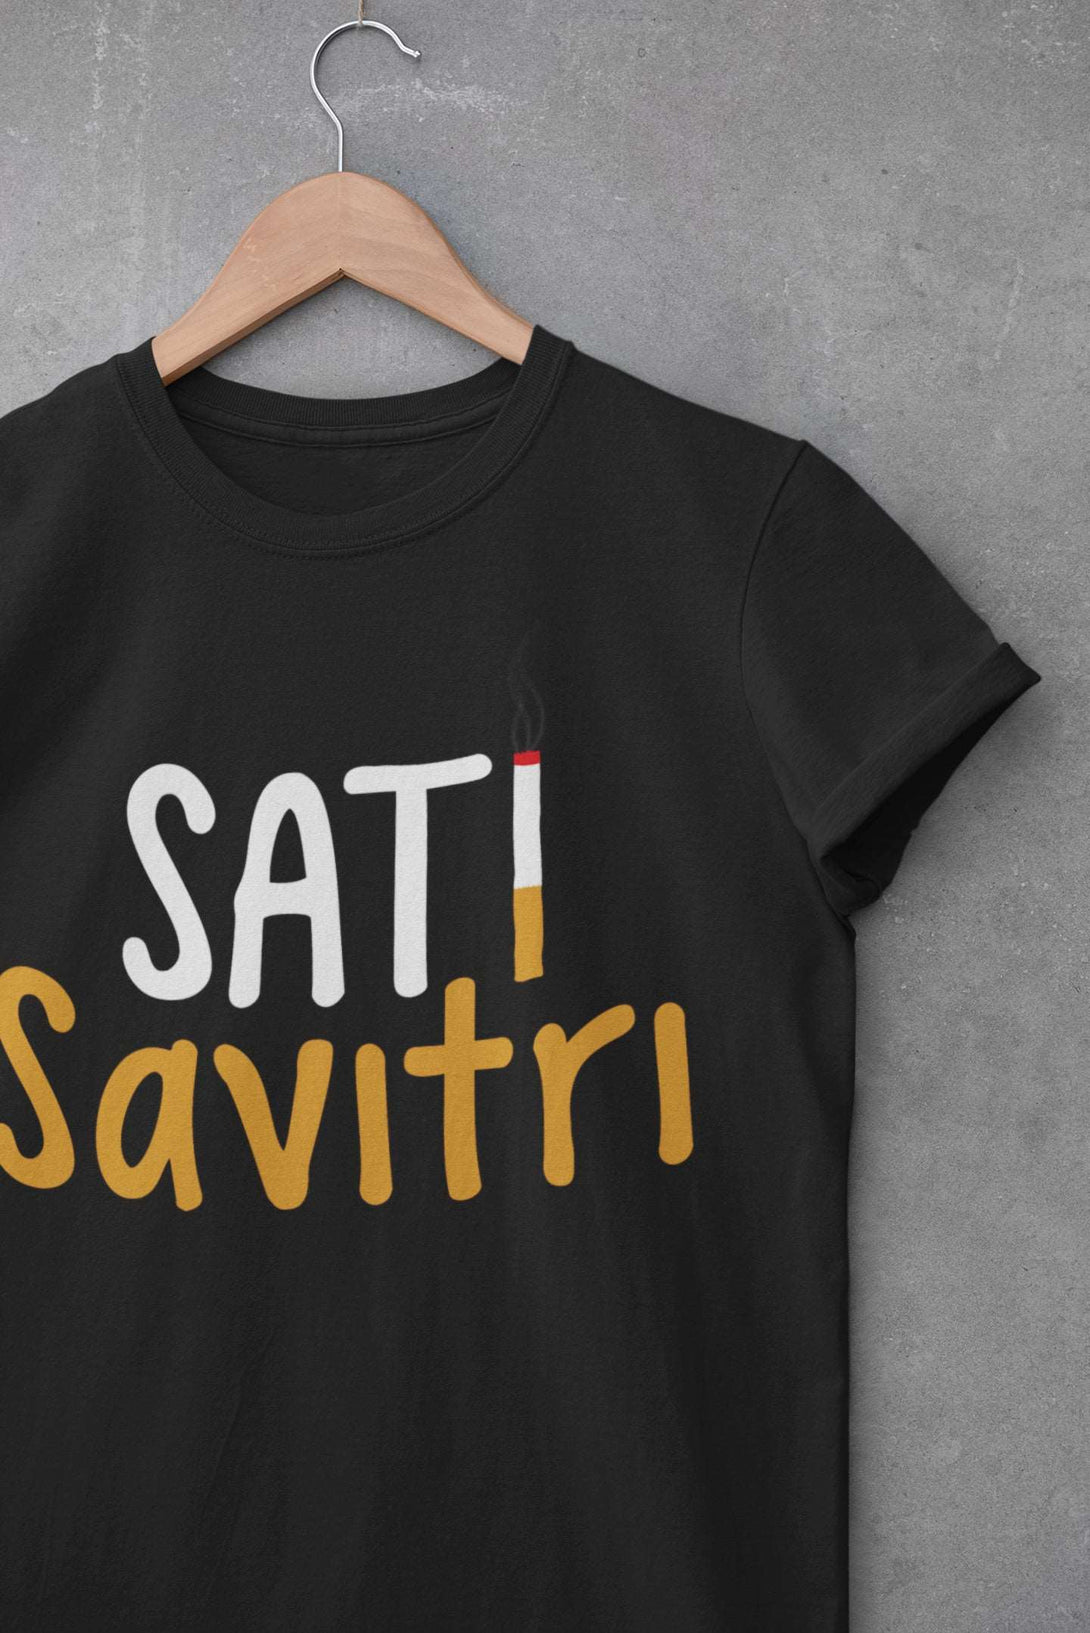 Sati Savitri Black Unisex Fit T-shirt